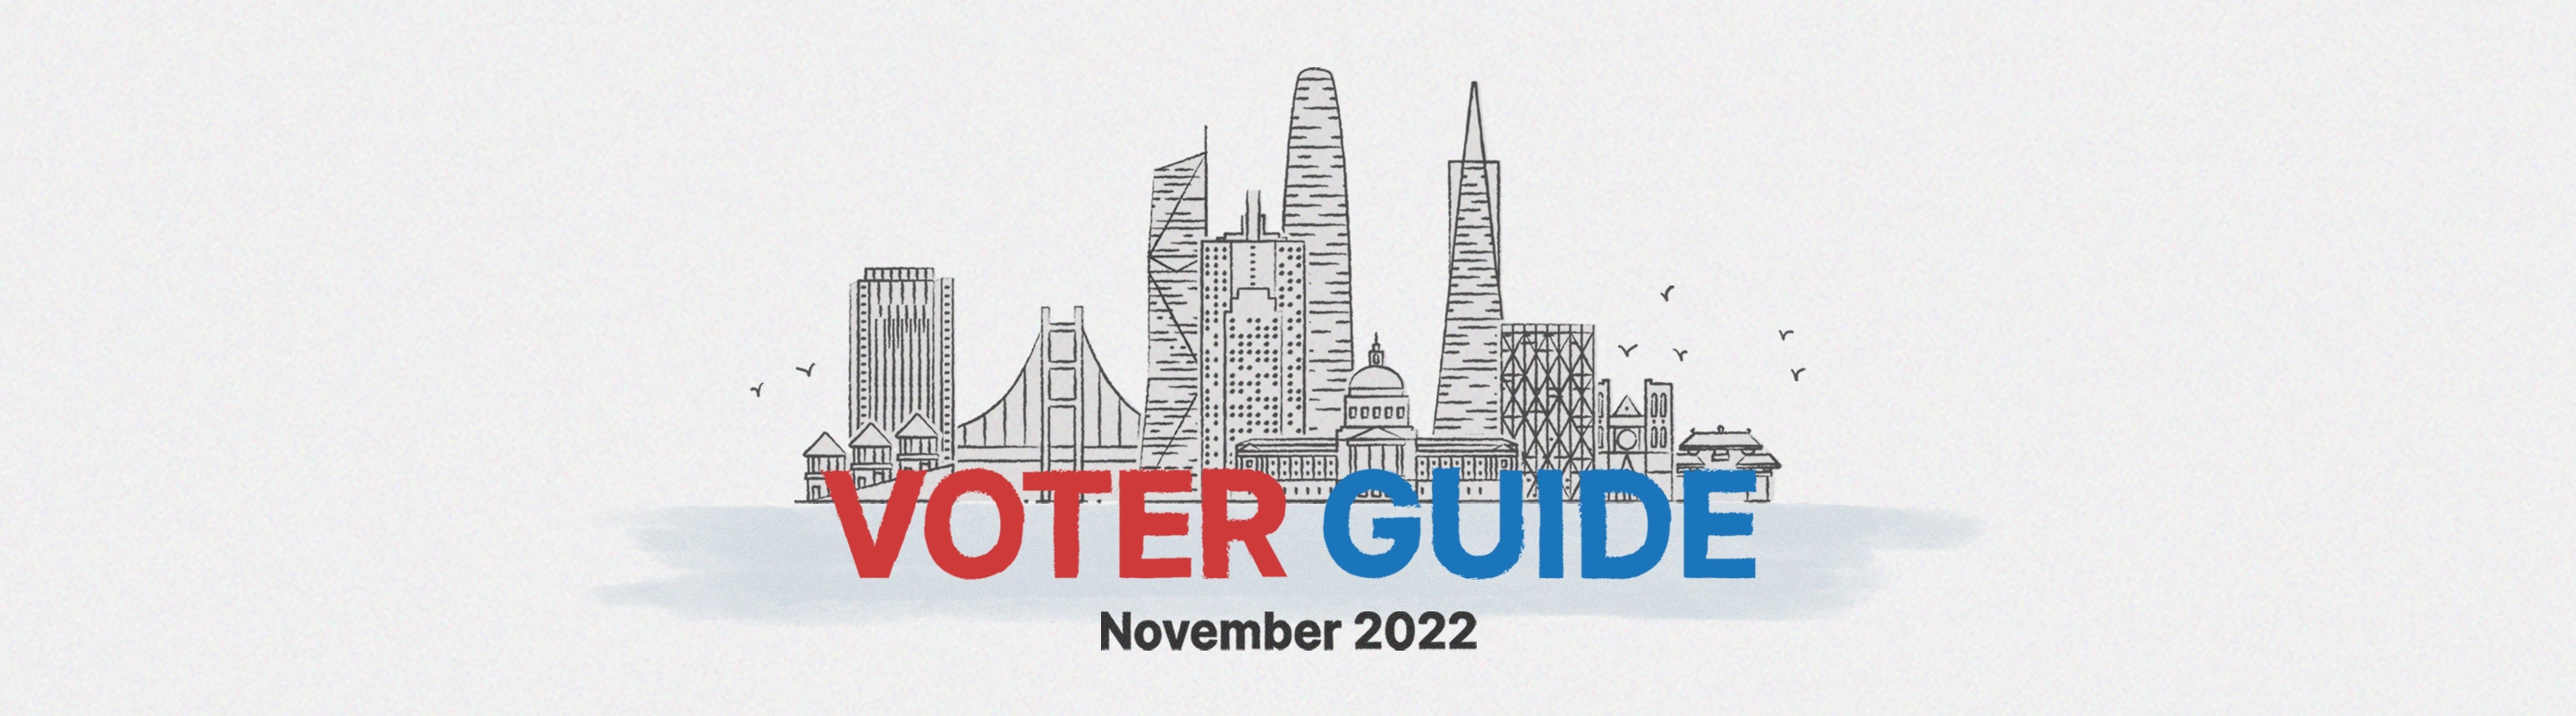 voter guide banner